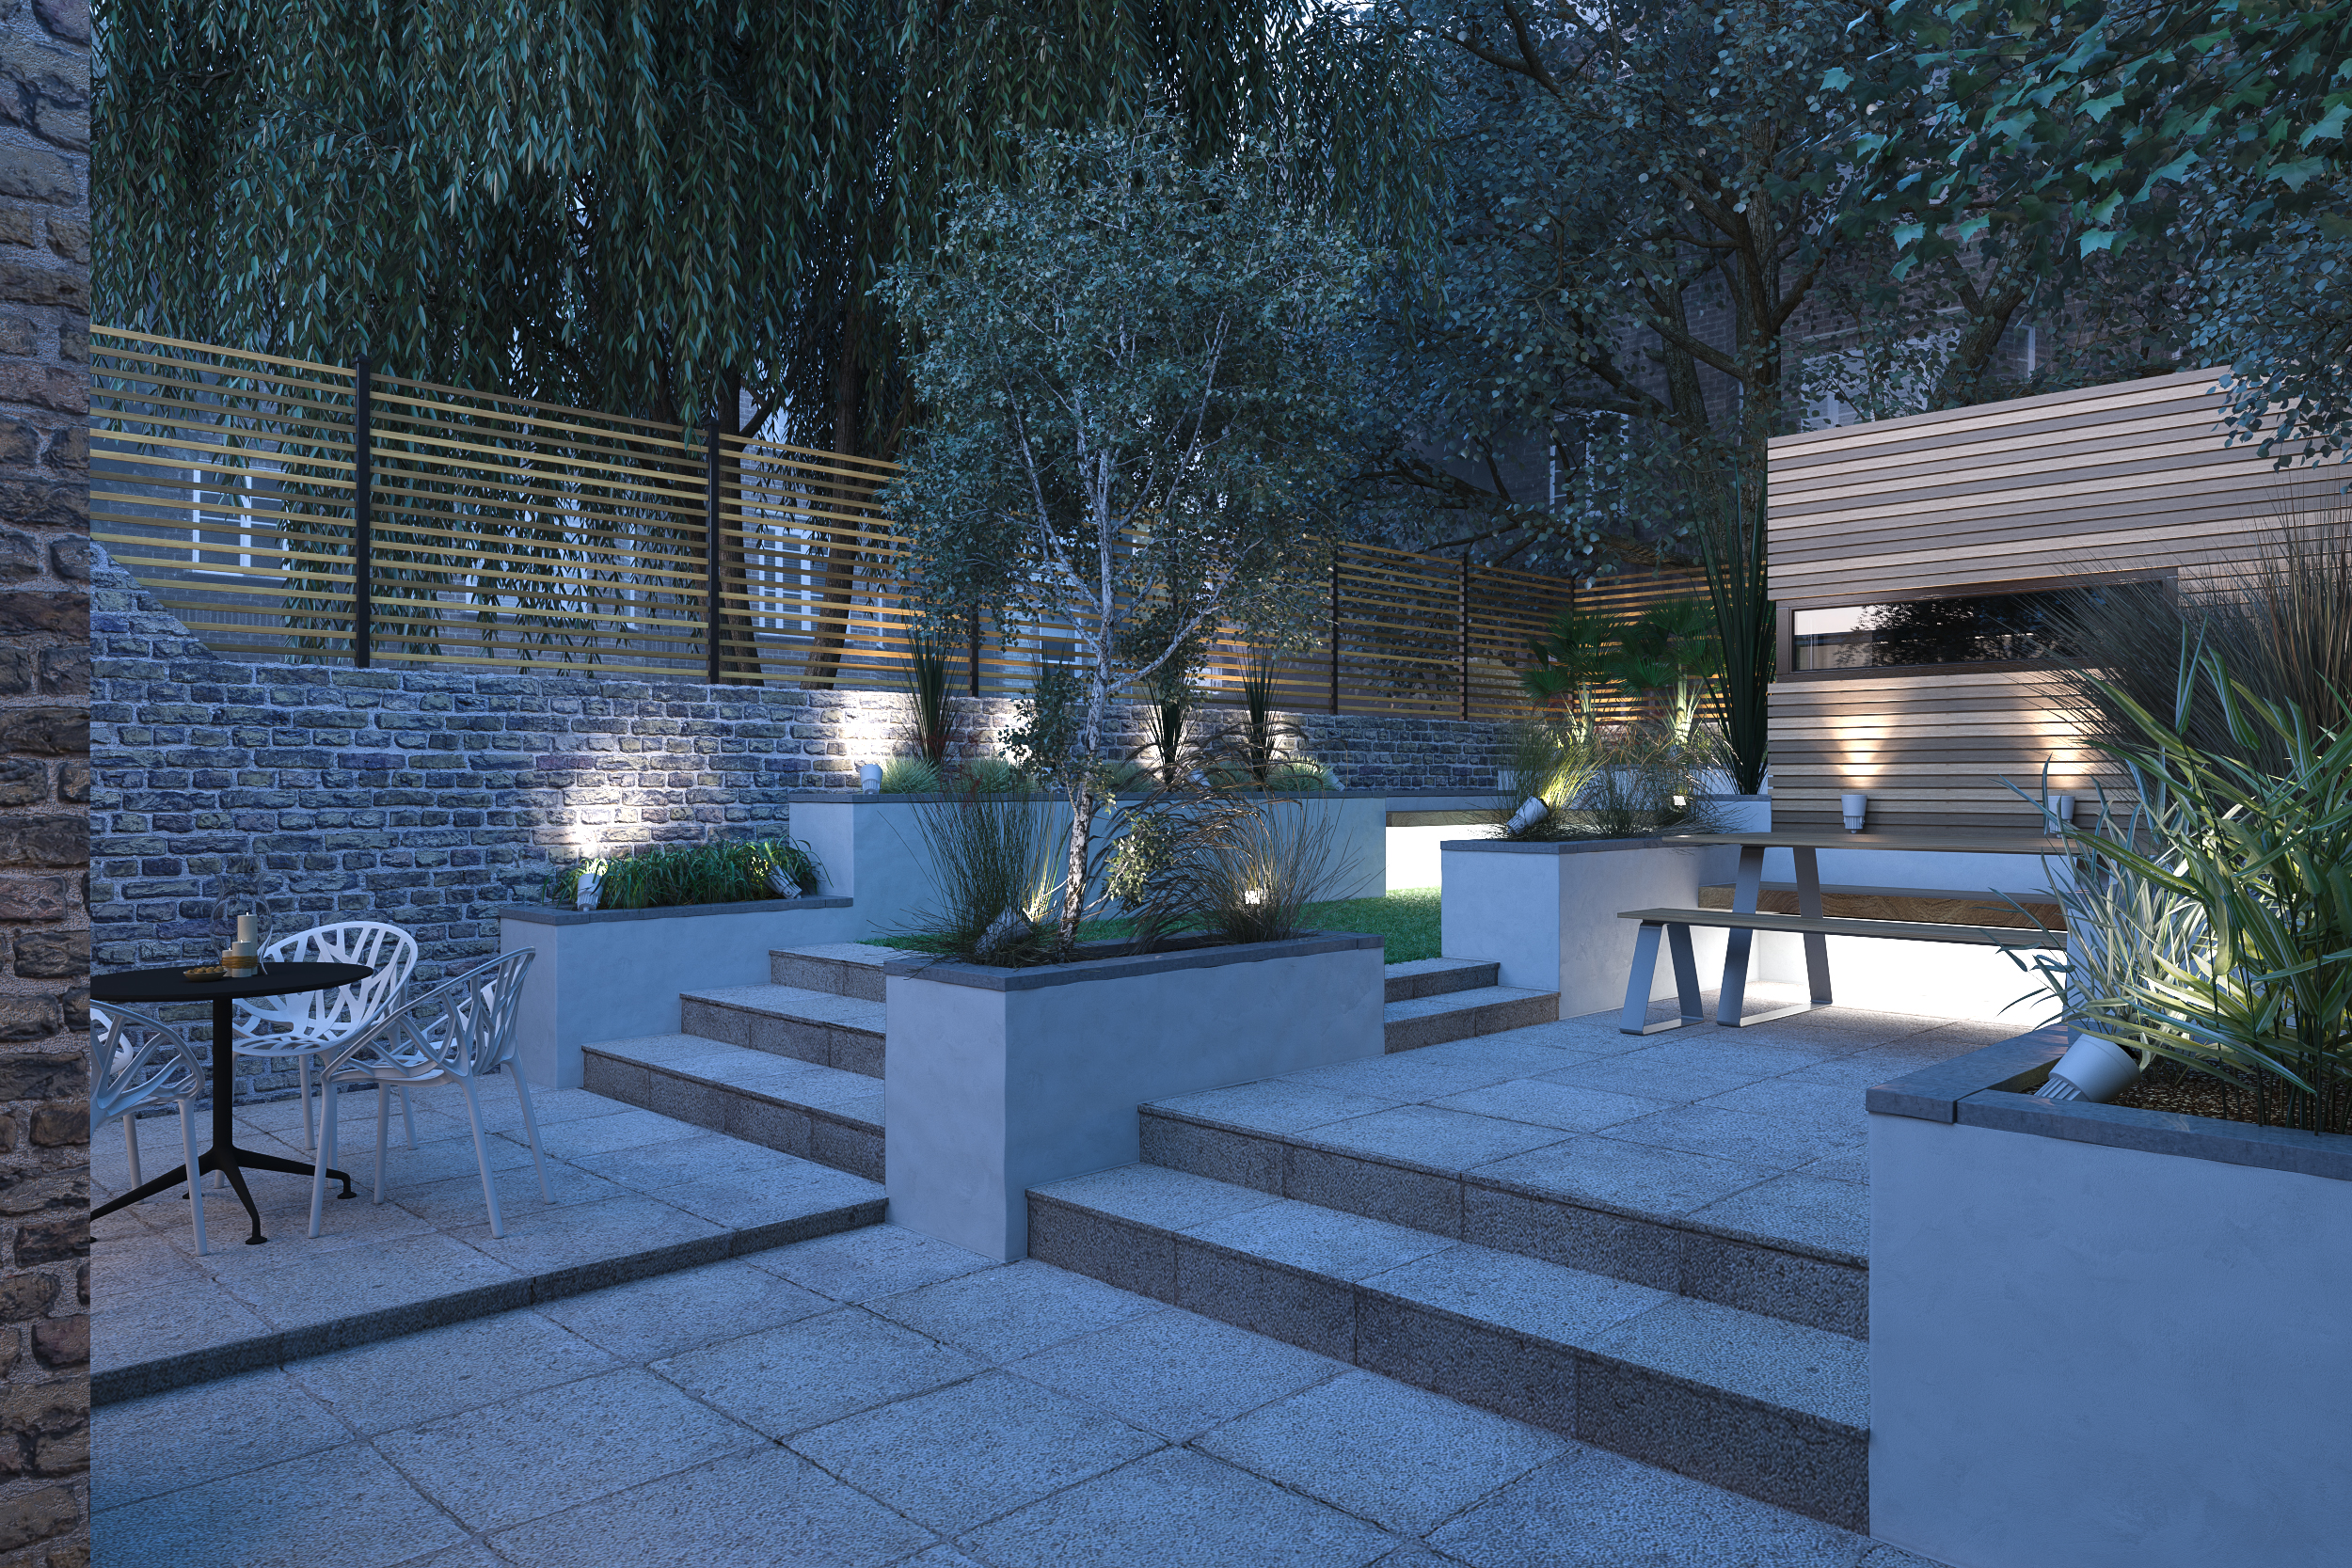 High End Luxury Interior Designer Conceptual CGI Visuals Unit4 London